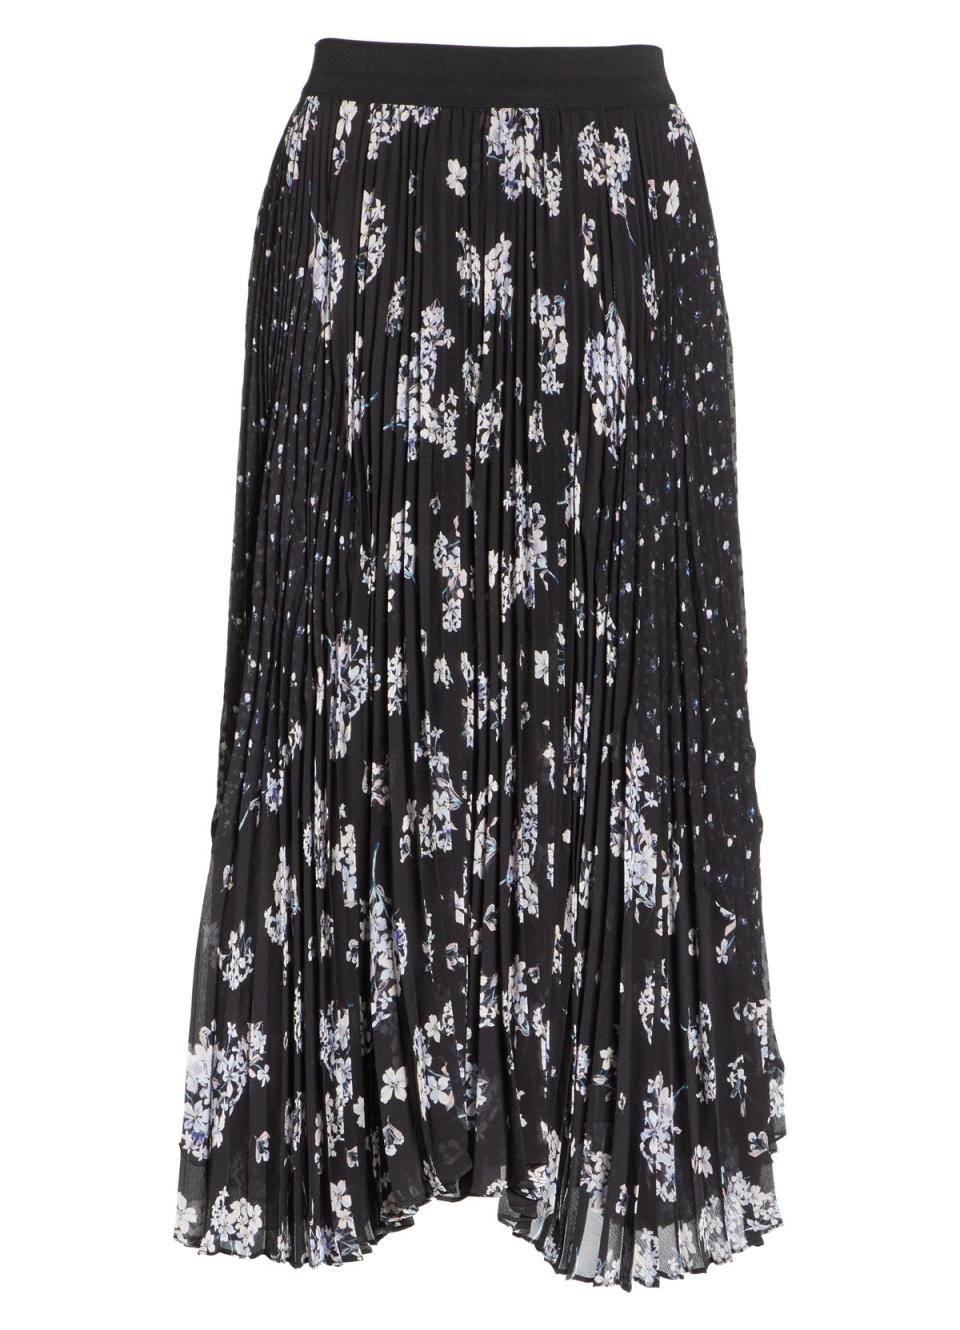 Rebecca Taylor Pleated Hydrangea Skirt, $495 $329.90, Nordstrom